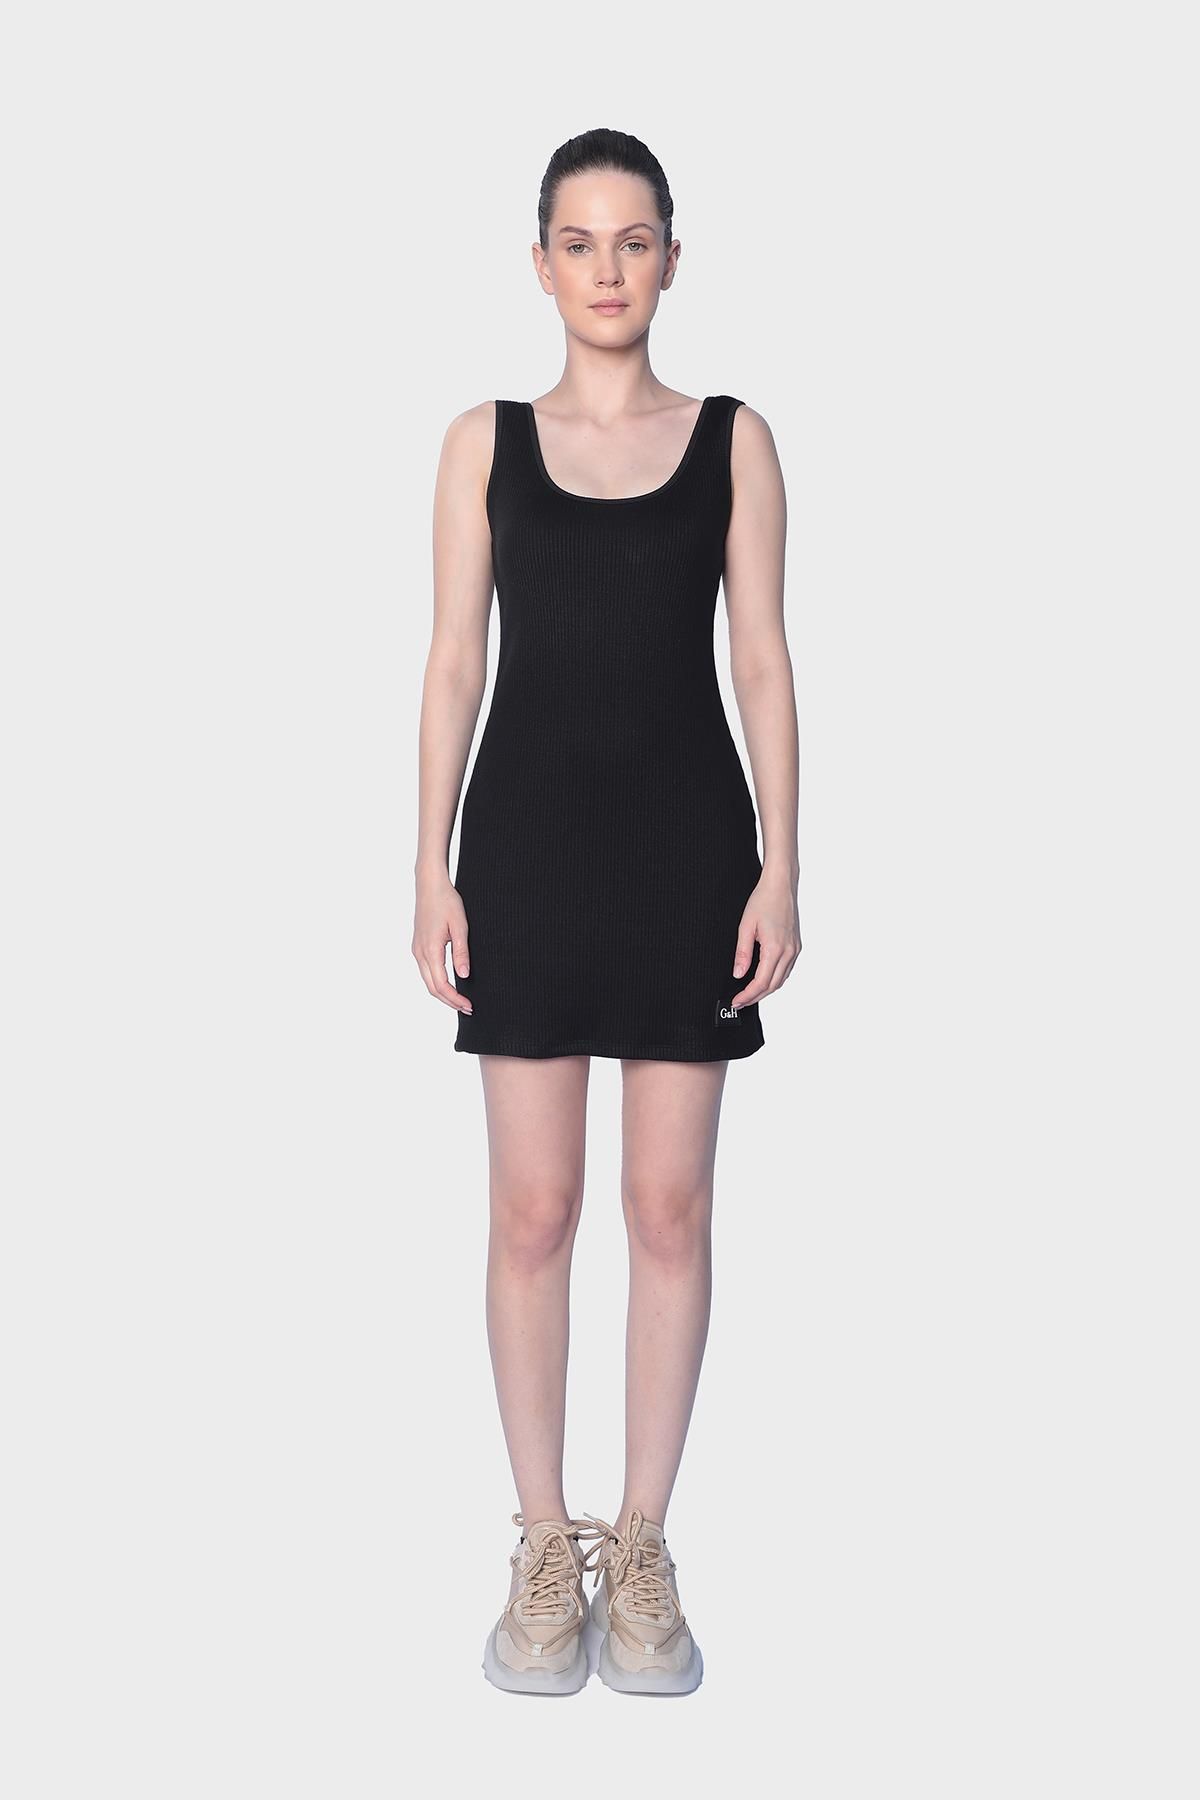 Black Square Neckline Fitted Acrylic Fabric Mini Dress